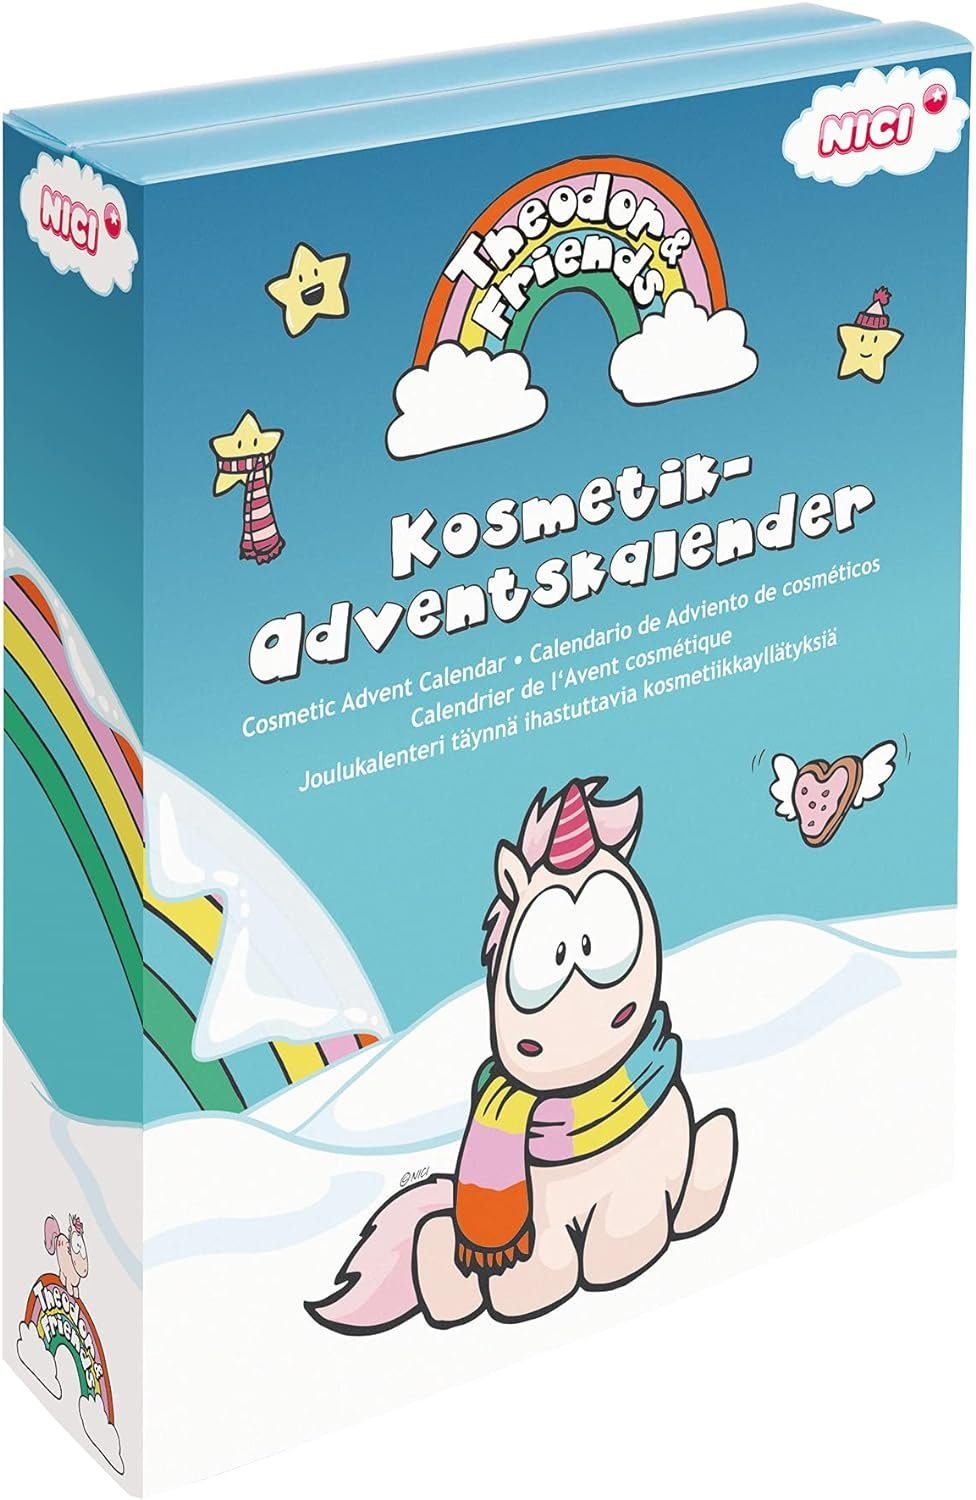 Nici Adventskalender Theodor and Adventskalender – Einhorn Friends Kosmetik